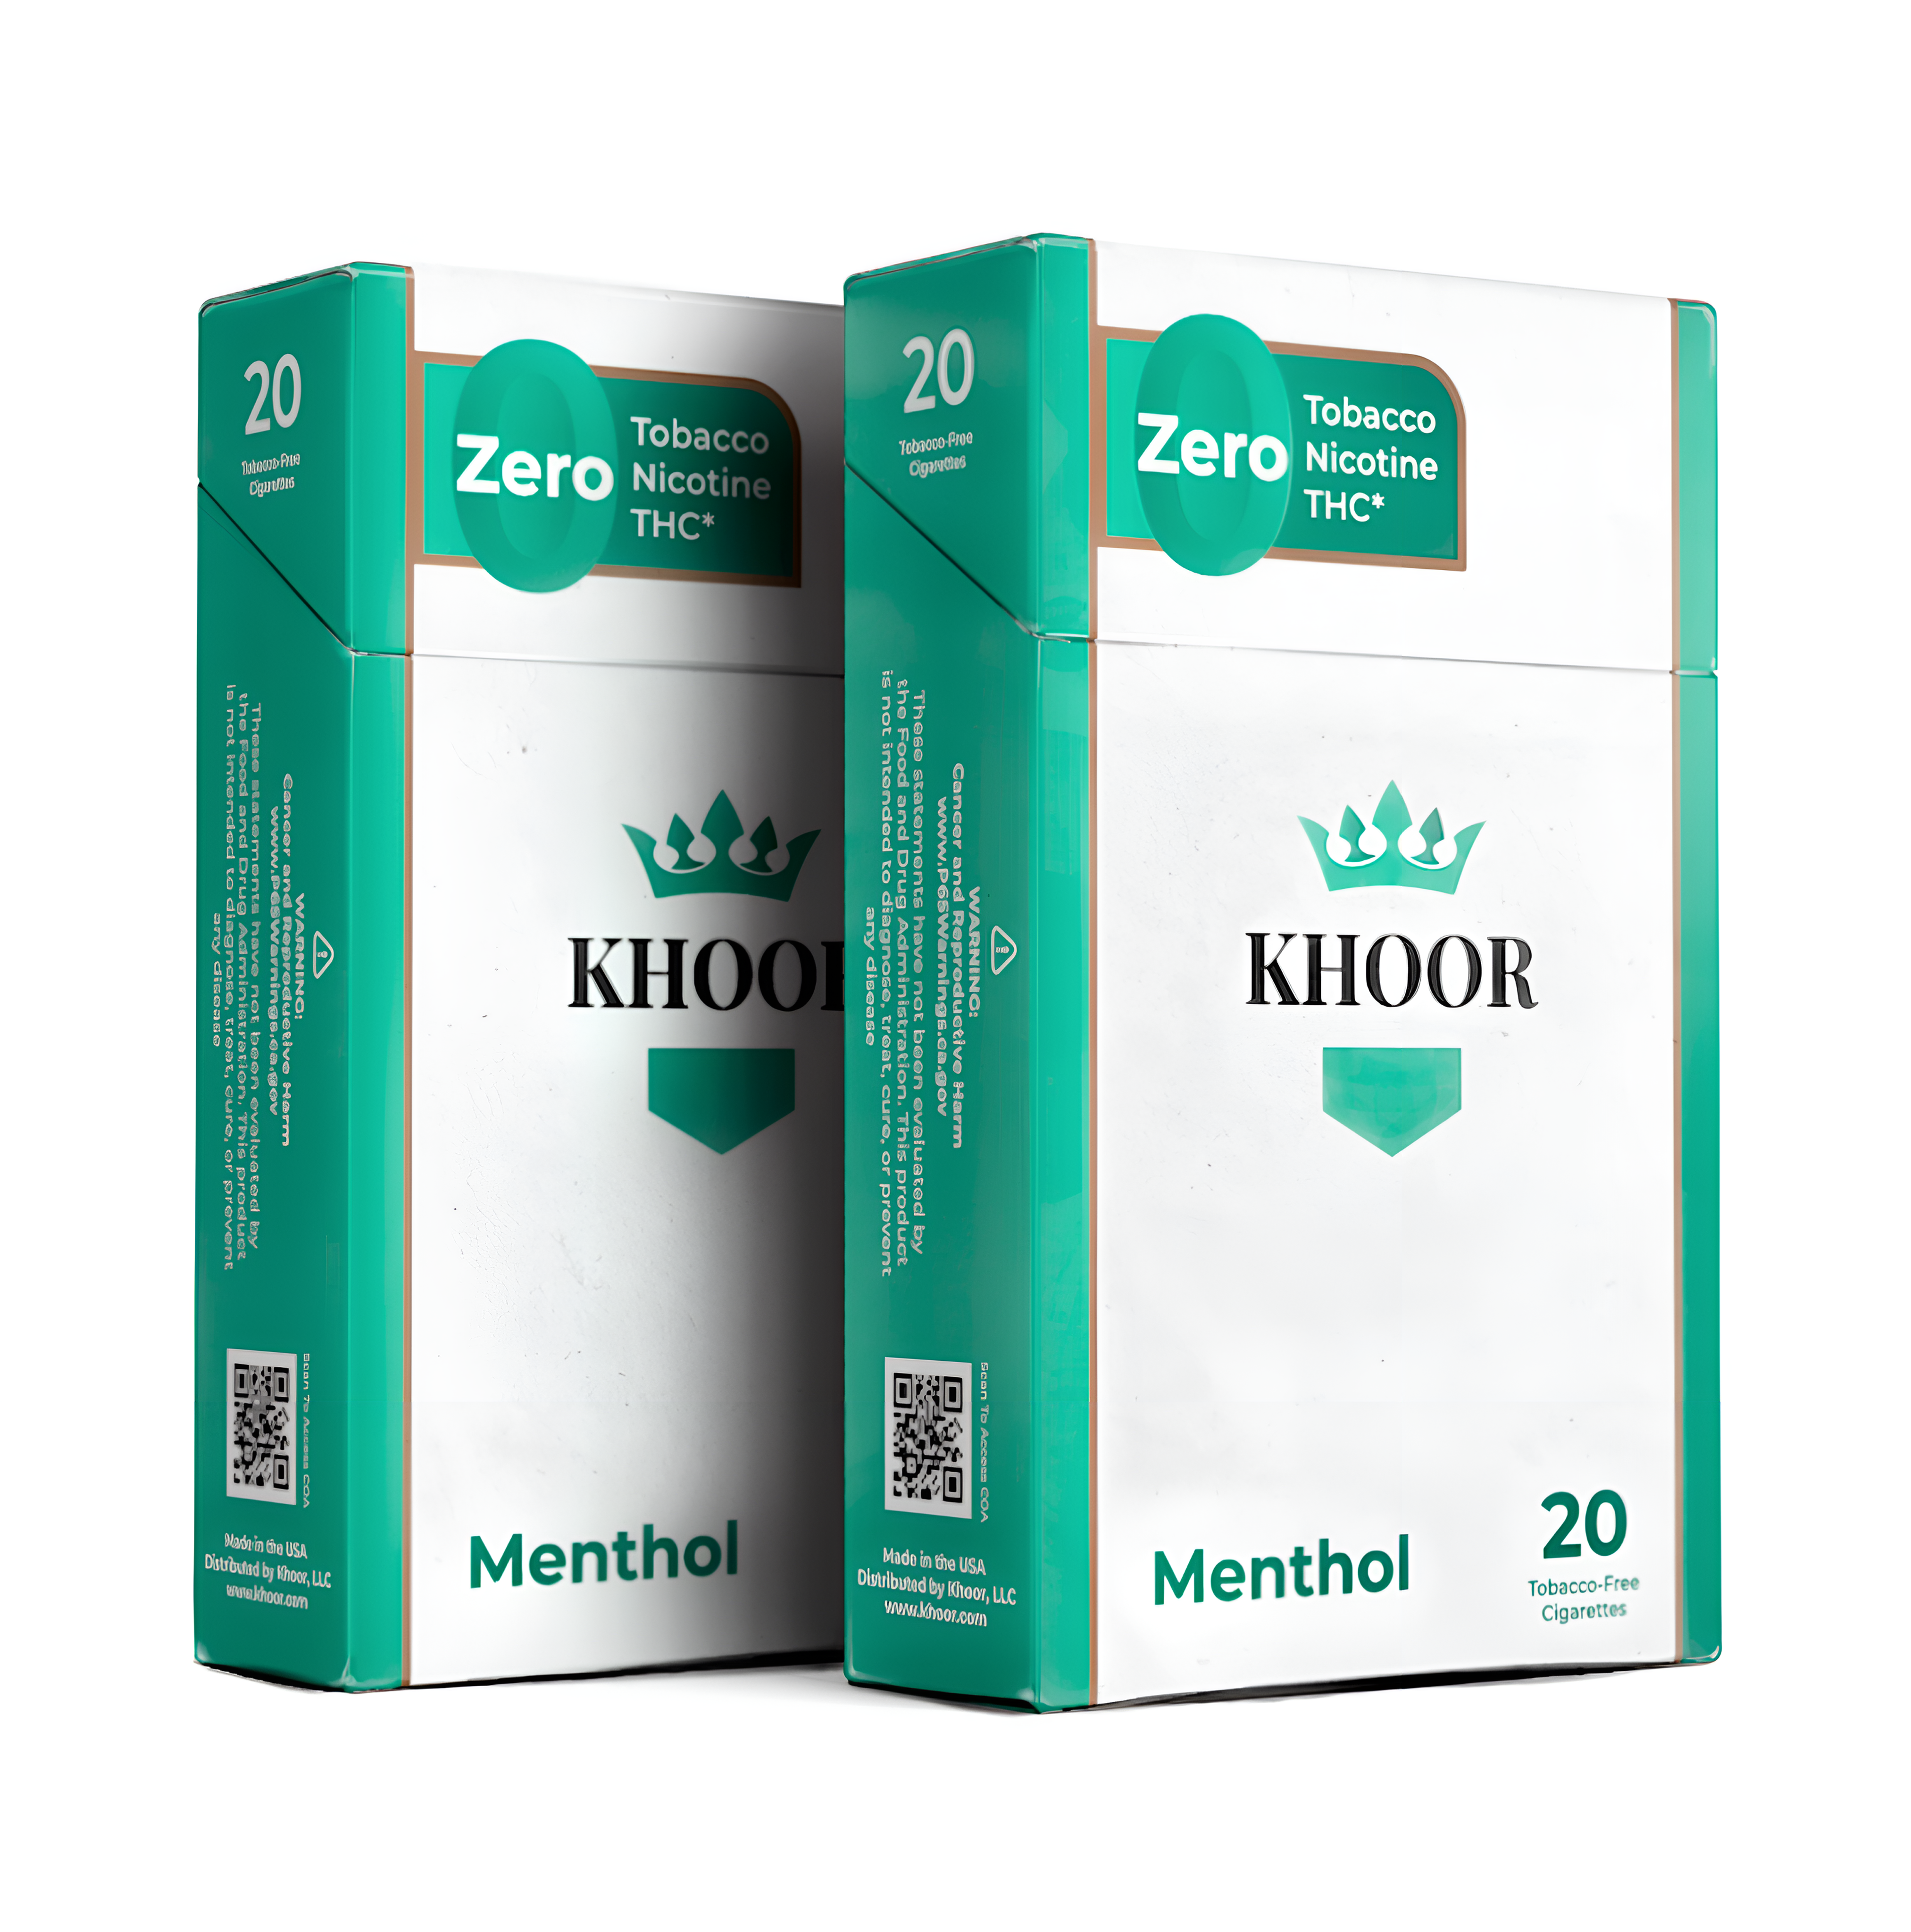 KHOOR™ Tobacco-Free Menthol Cigarettes, Herbal Cigarettes